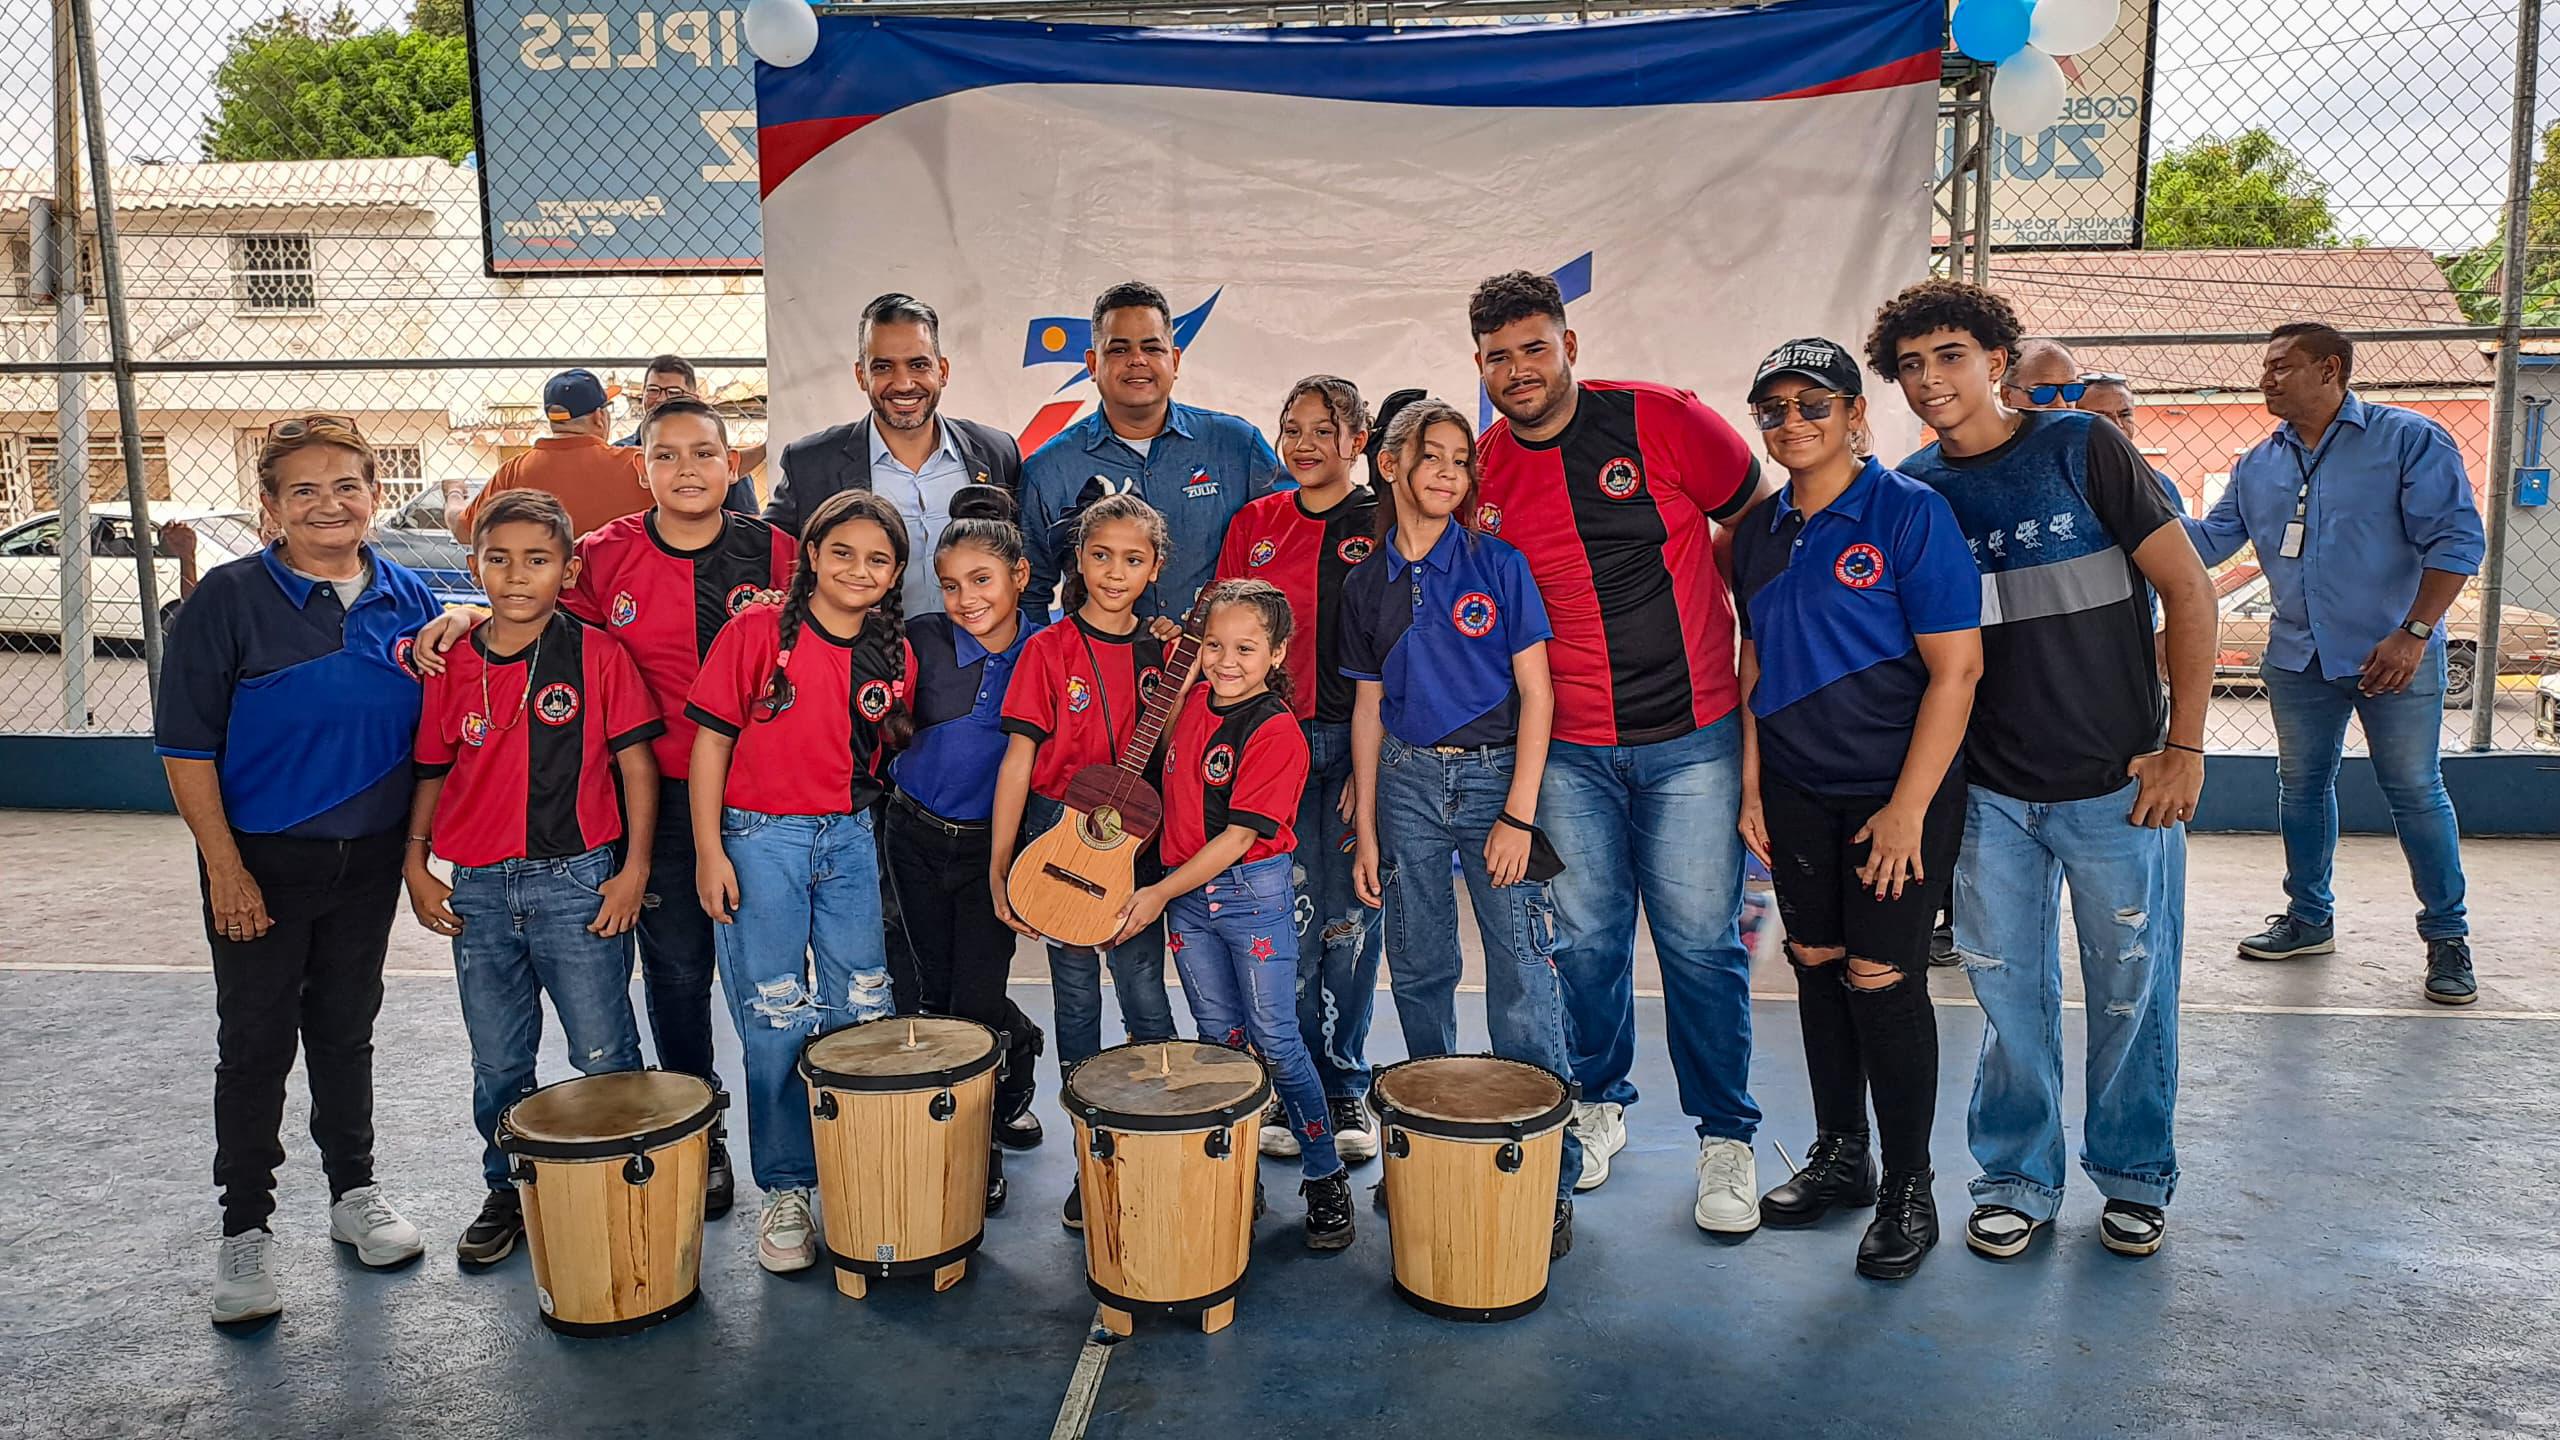 Gobernación del Zulia dota de instrumentos gaiteros a 8 parroquias de Maracaibo y San Francisco